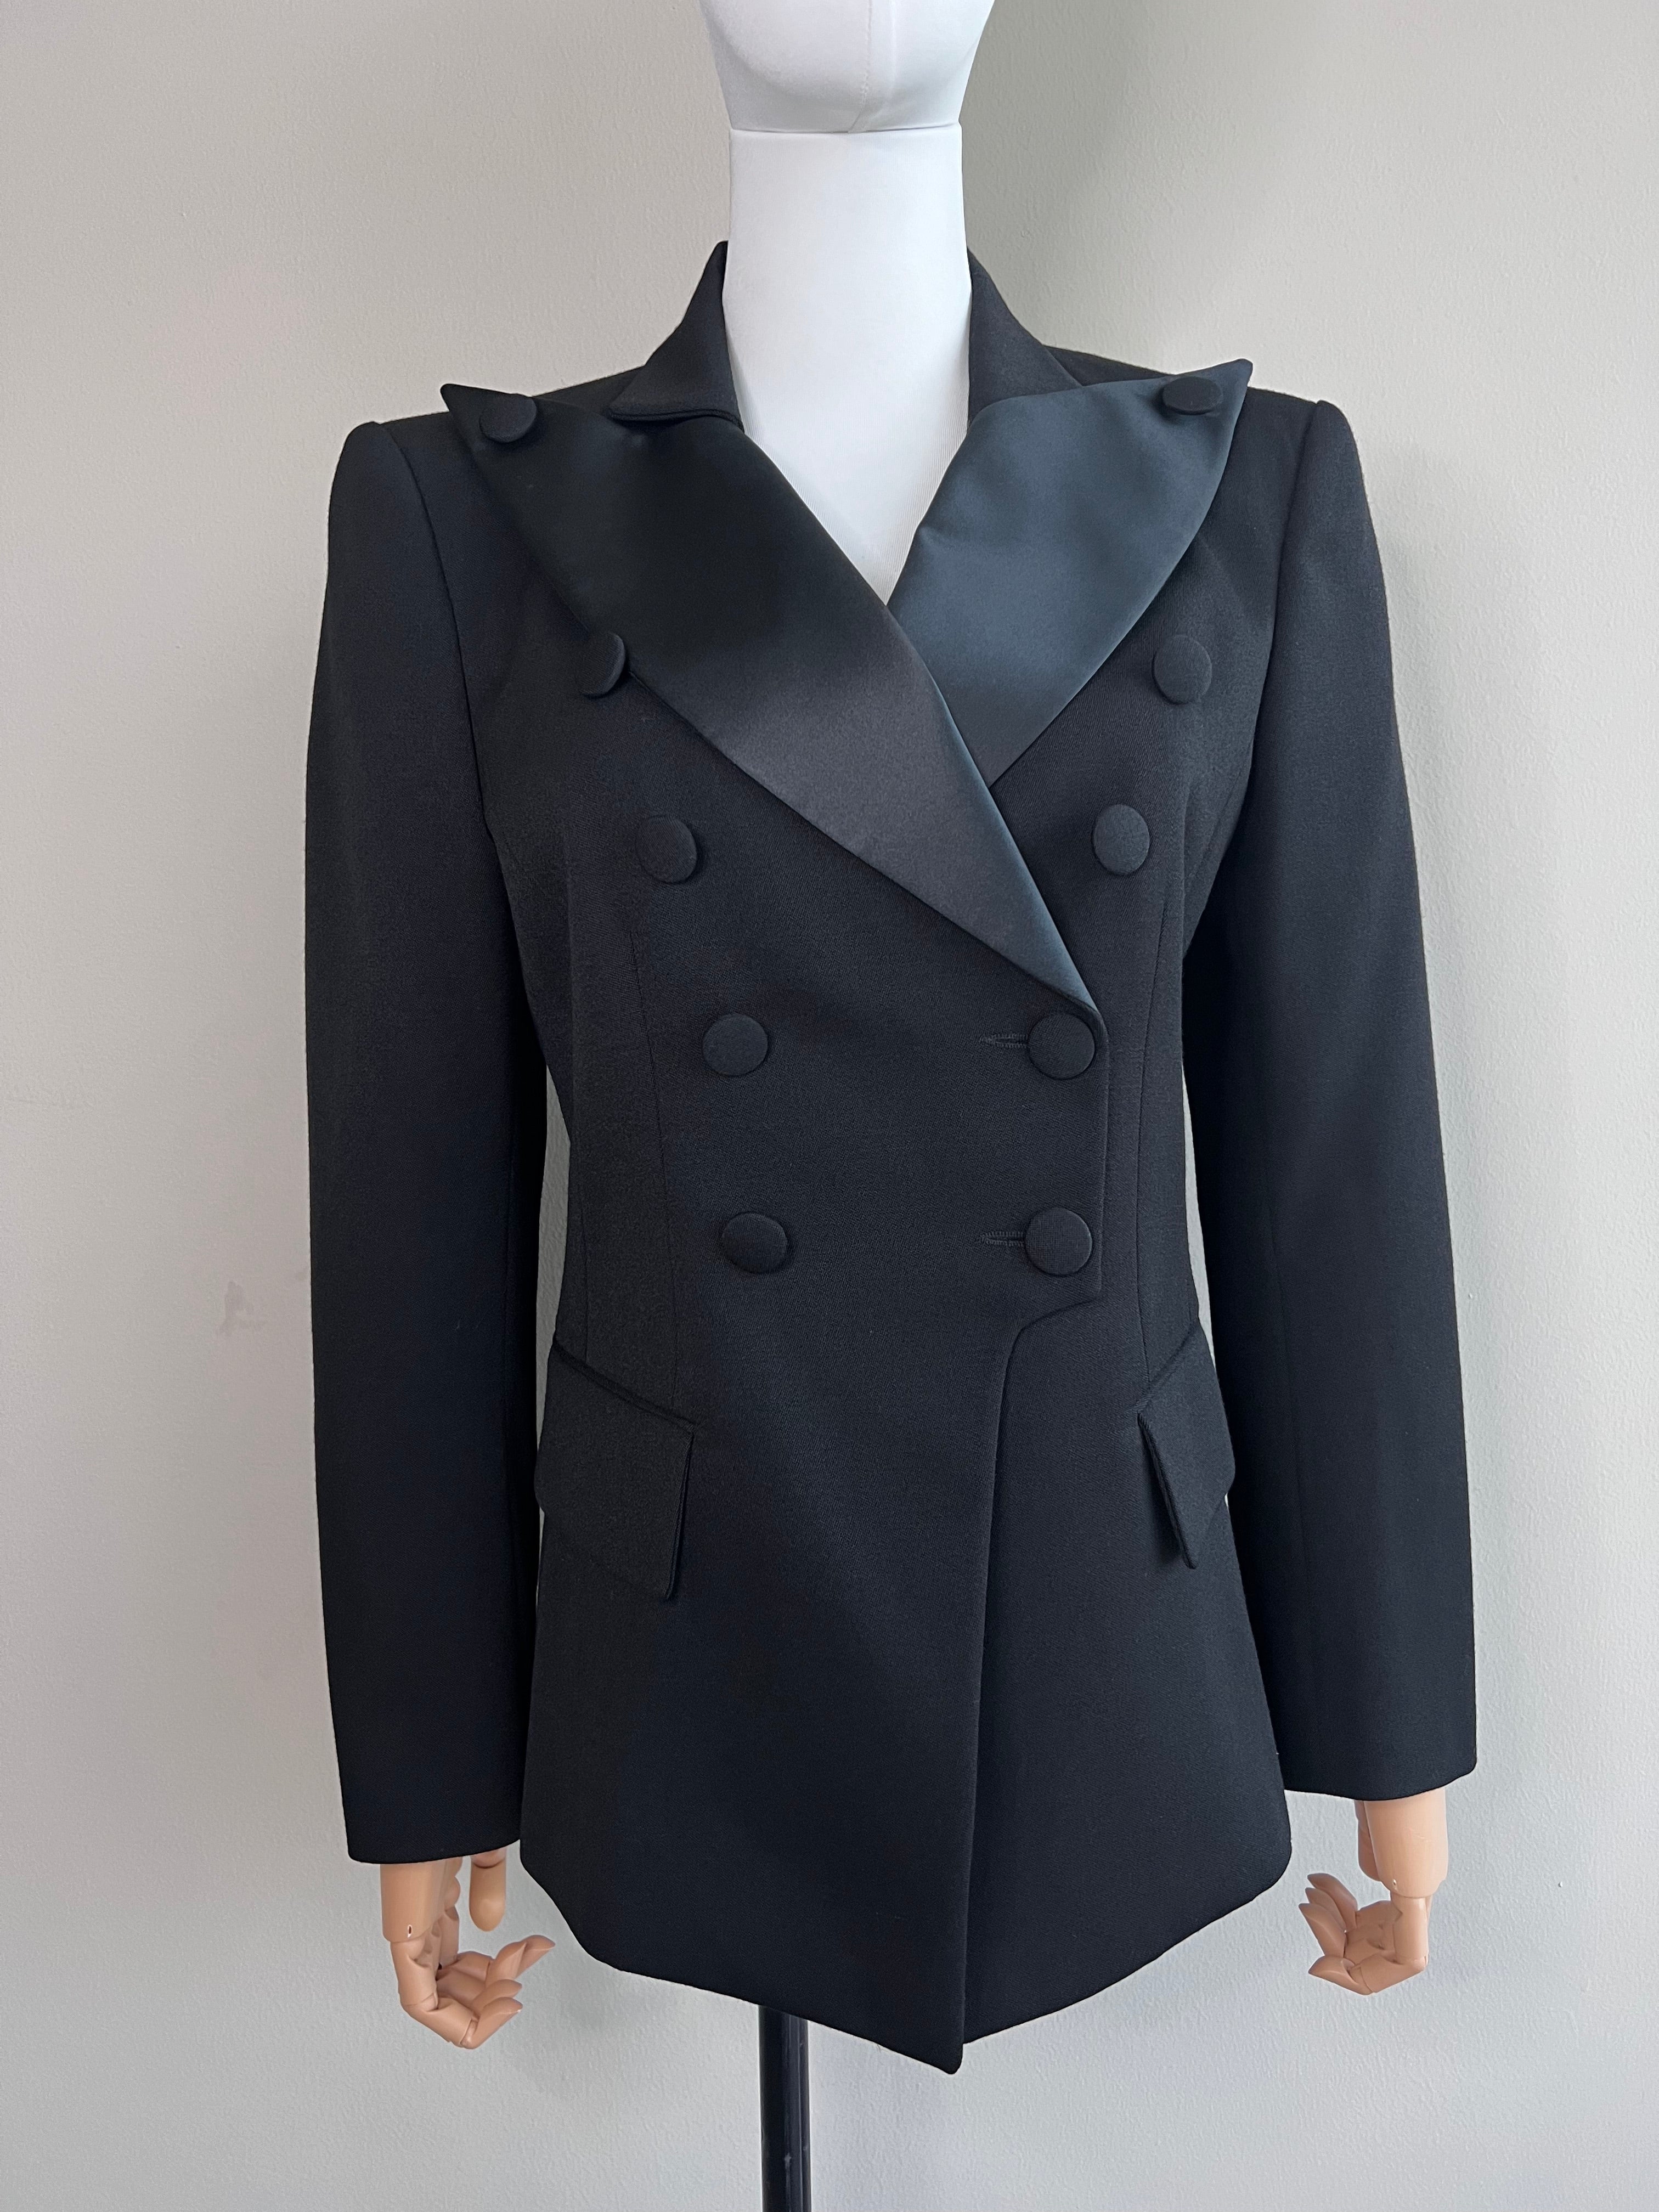 Black Tuxedo suit in cashmere wool blazer - BALMAIN